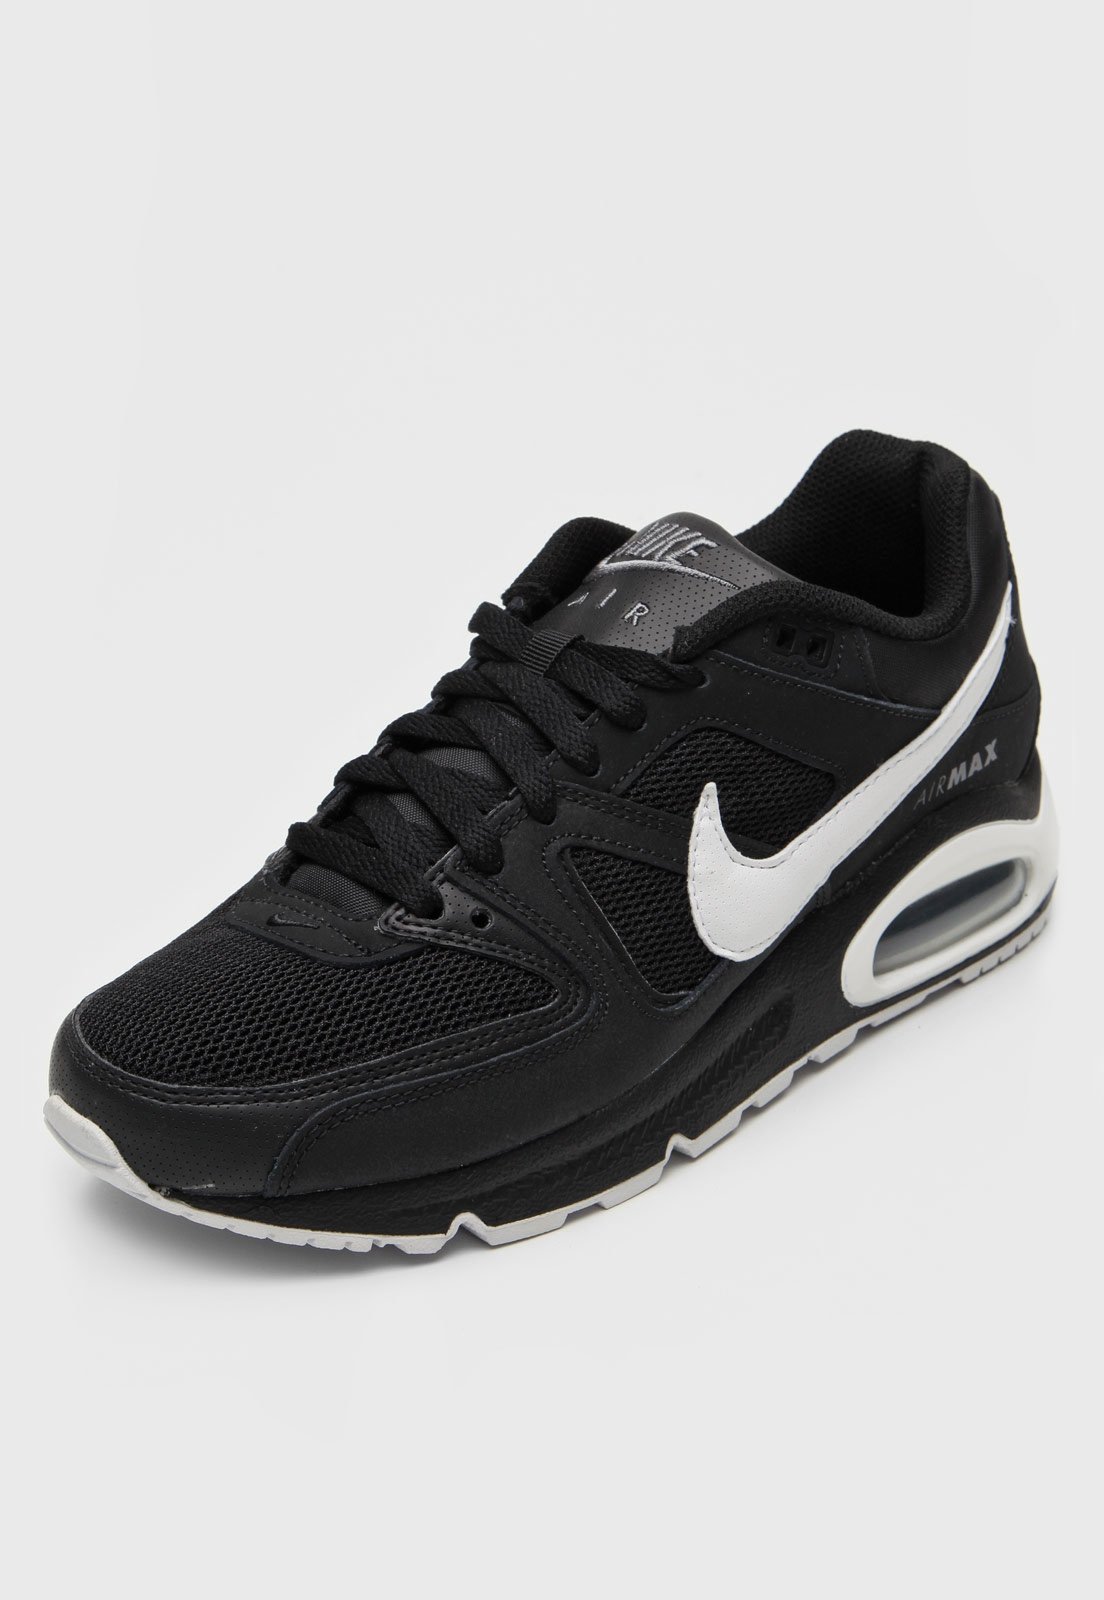 Tênis Nike Sportswear Air Max Command Preto/Branco - Compre Agora